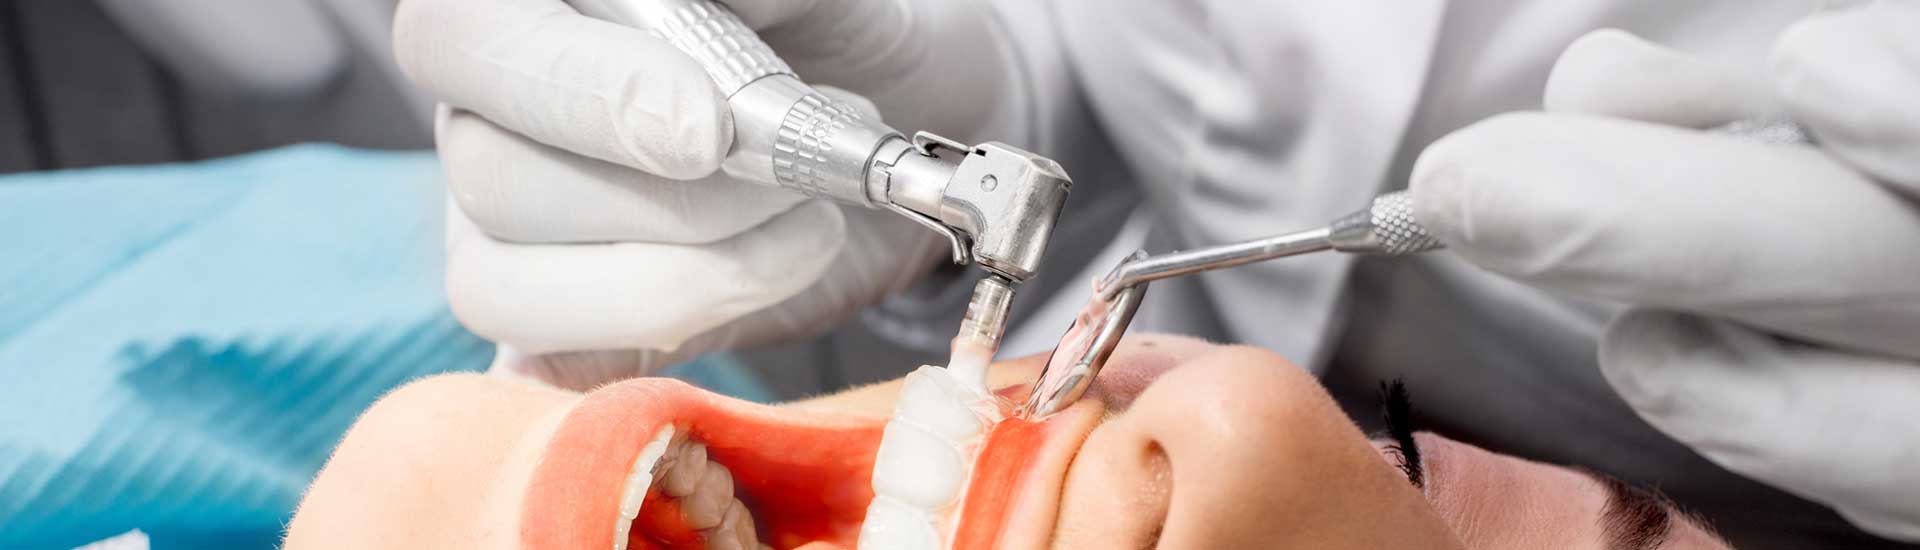 Profilaxis o Limpieza Dental Profesional - Clínica Dental Micale